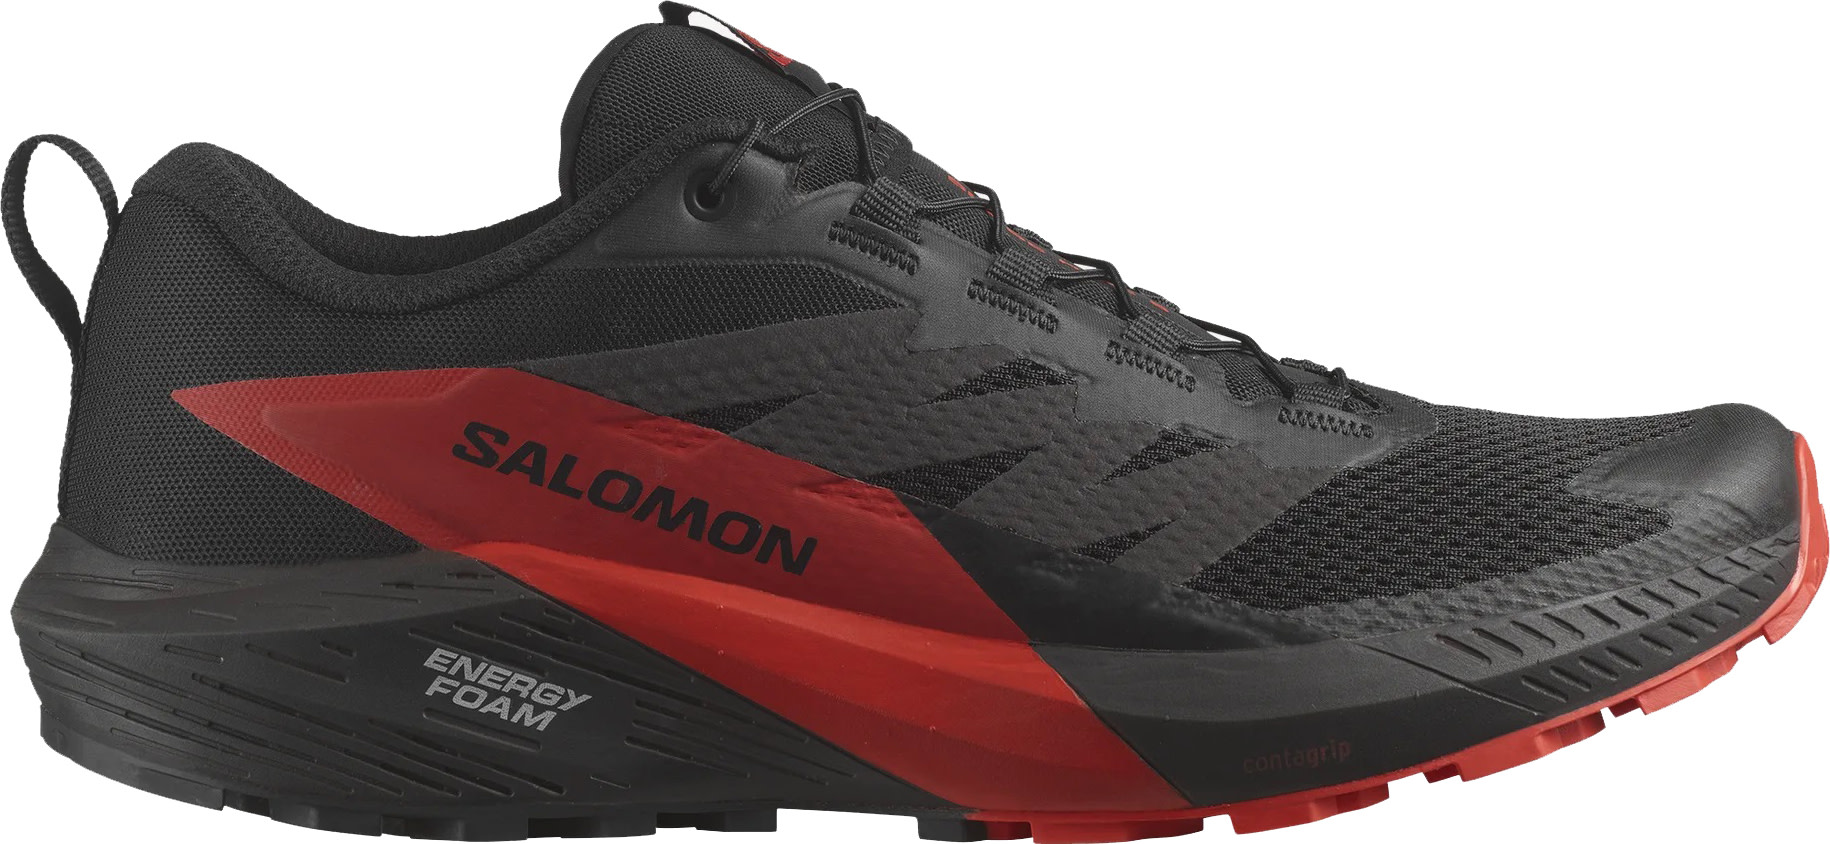 Salomon Men's Black Sense Ride 5 Trail Running Shoe